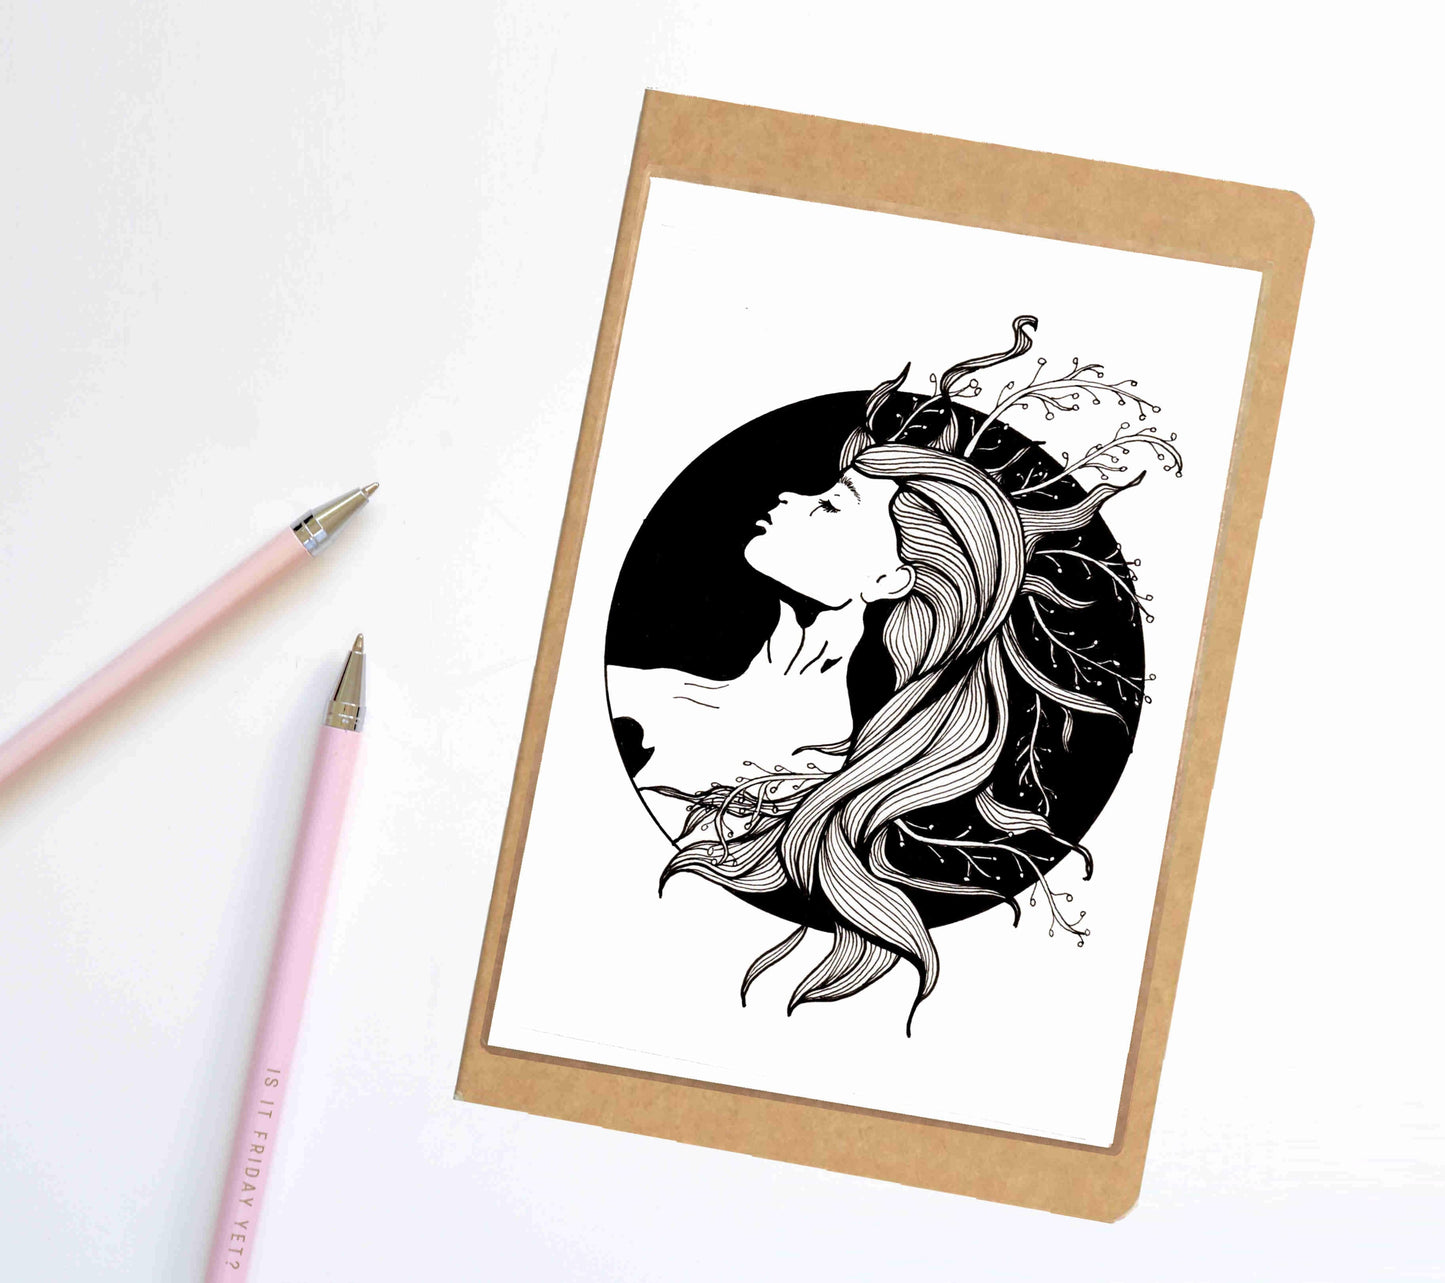 PinkPolish Design Notebook "Sea Witch" Fantasy Inspired Notebook / Sketchbook / Journal